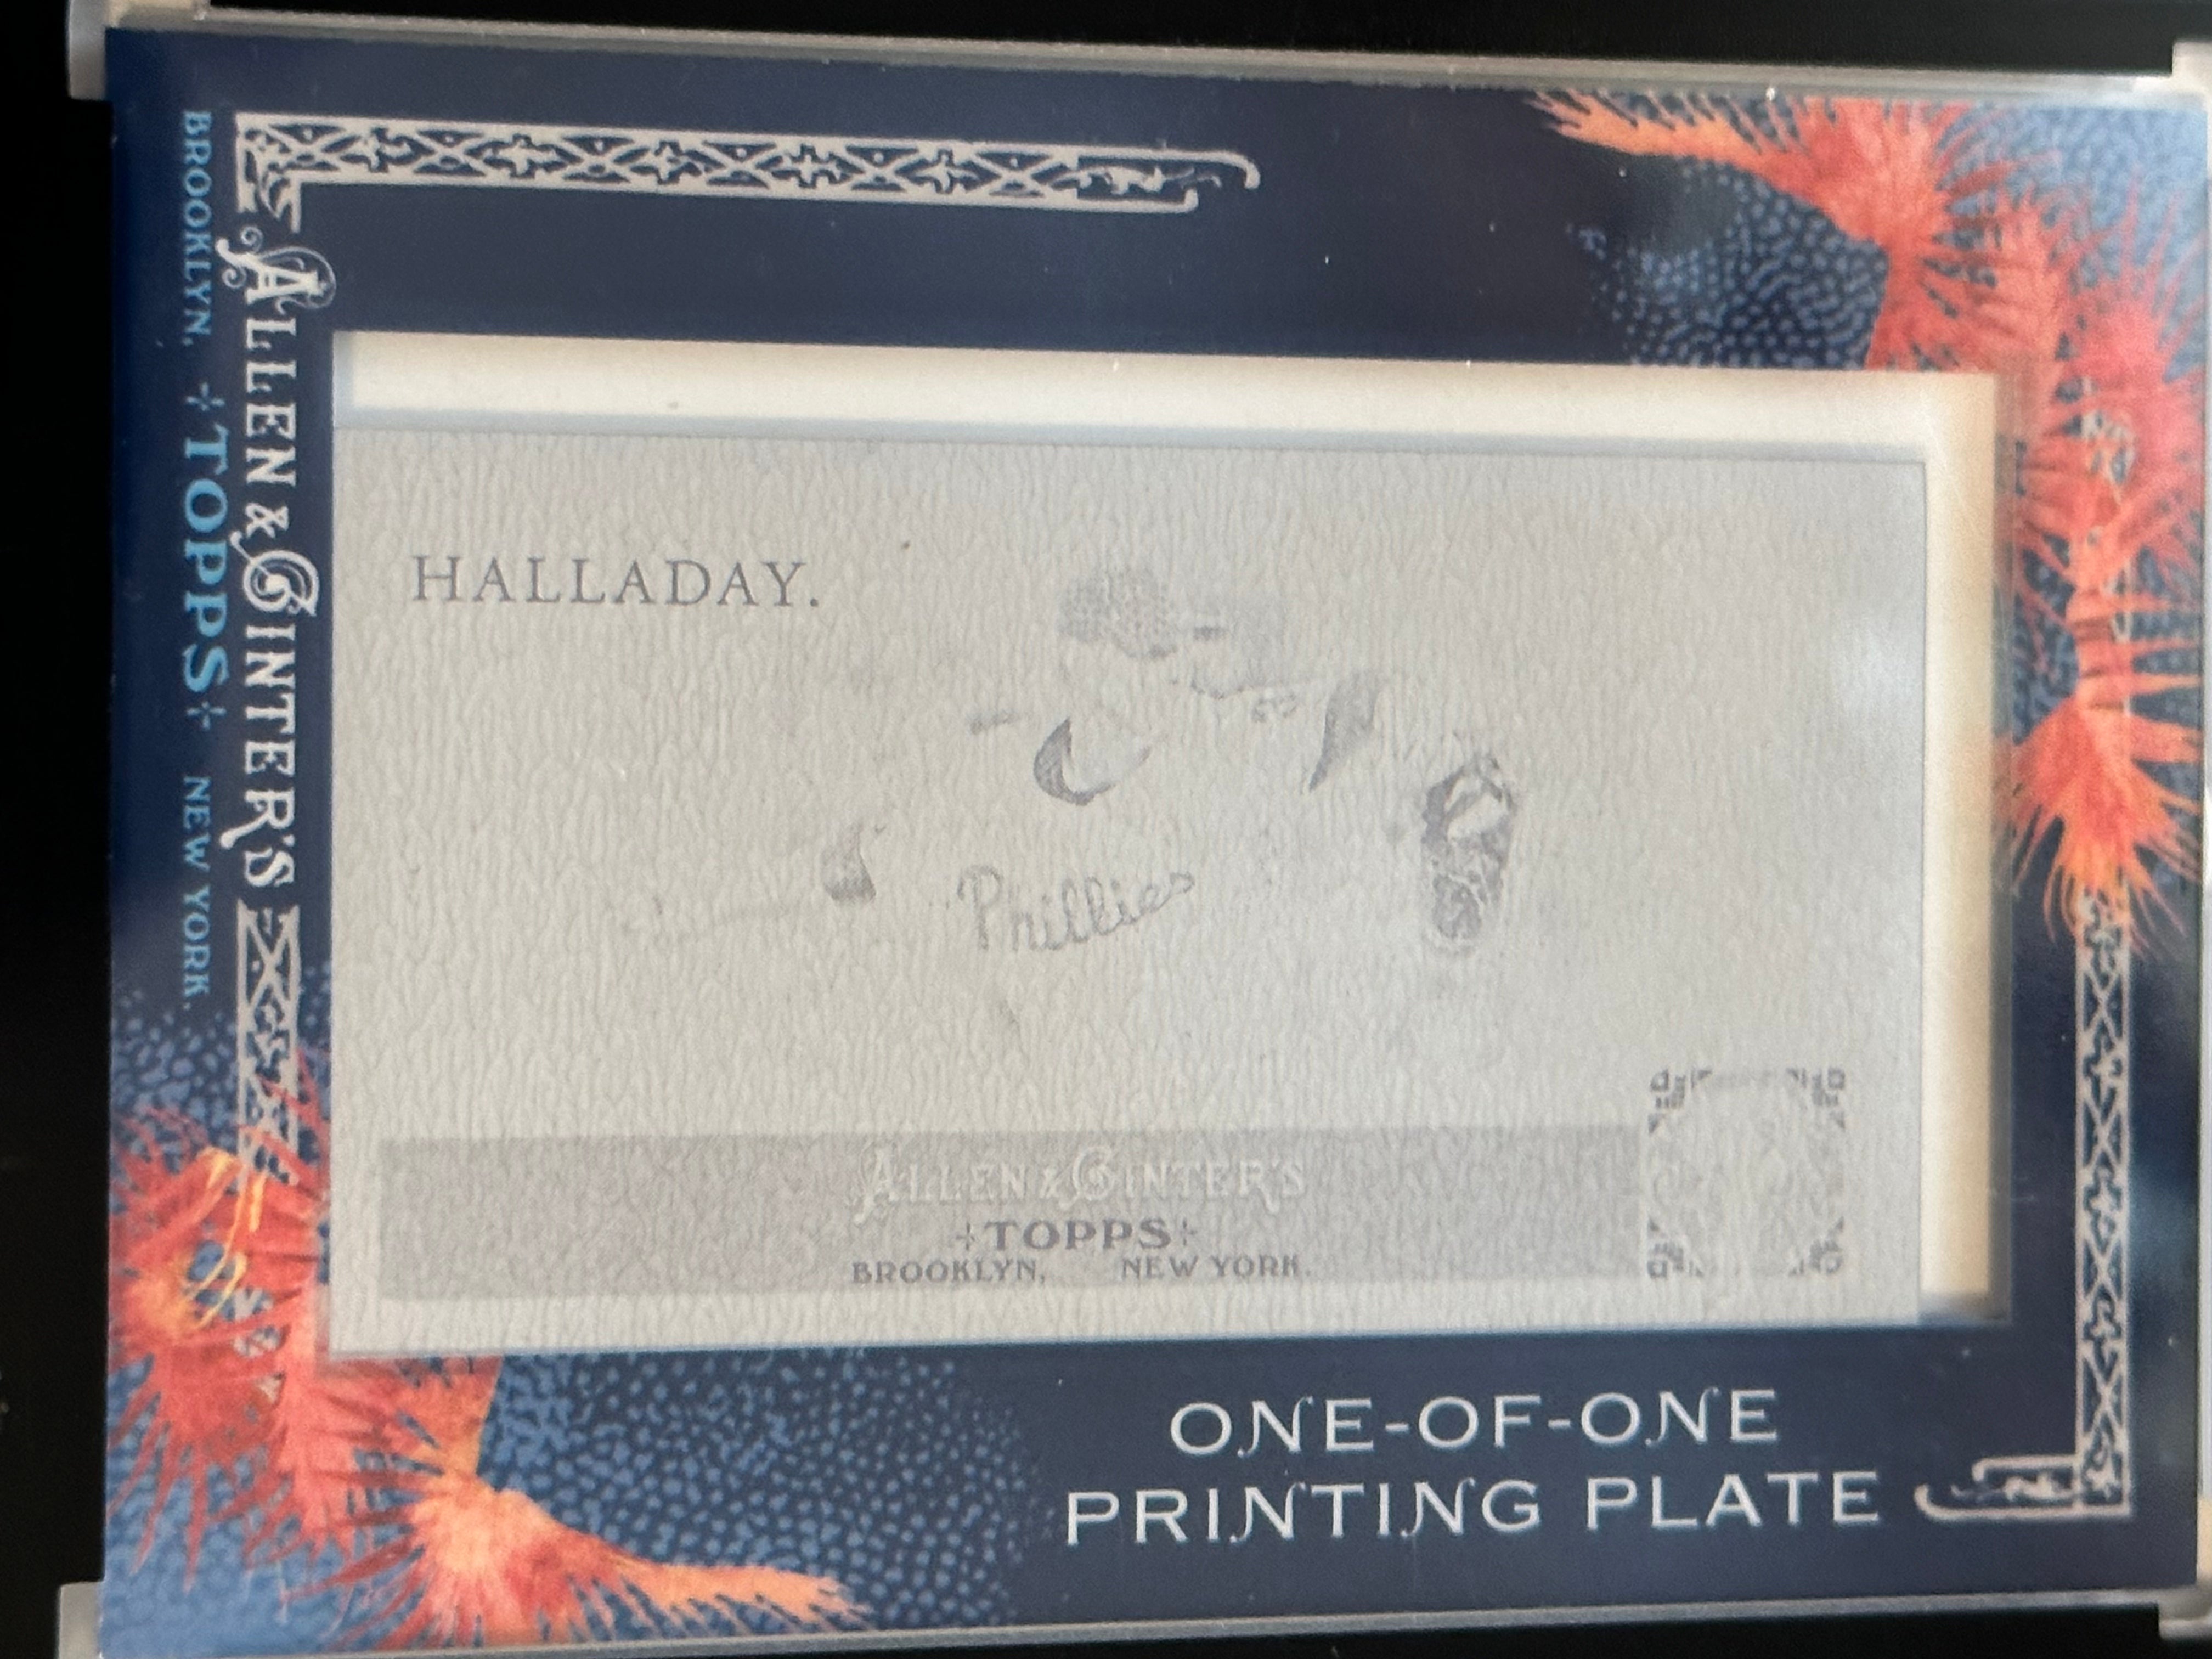 Roy Halladay rare 1/1 baseball printing plate insert card